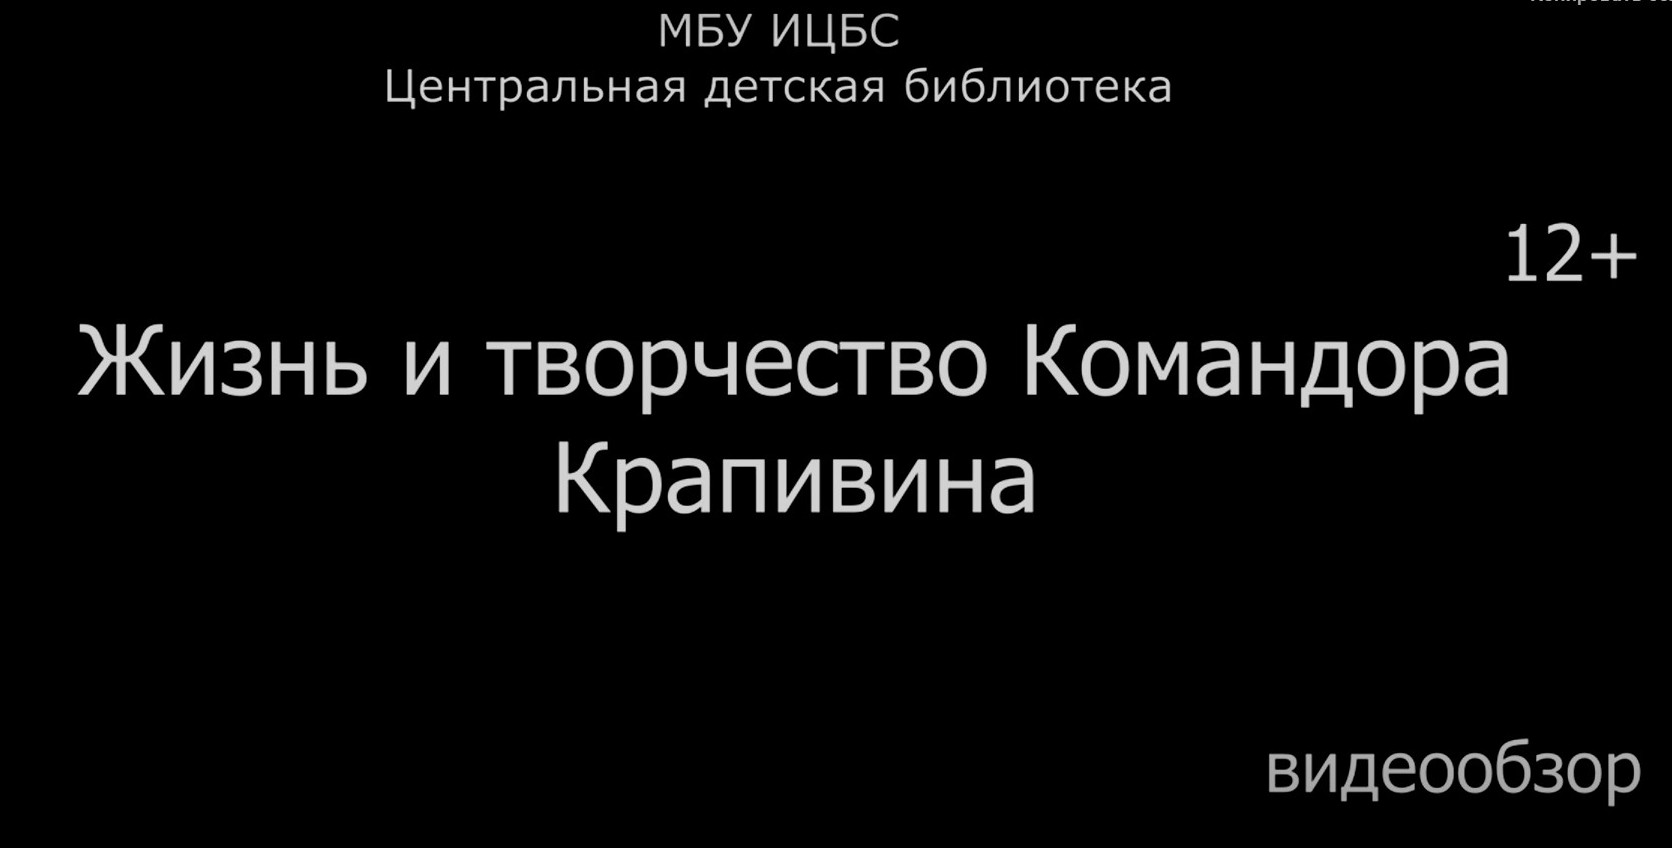 You are currently viewing Видеообзор “Жизнь и творчество командора Крапивина”